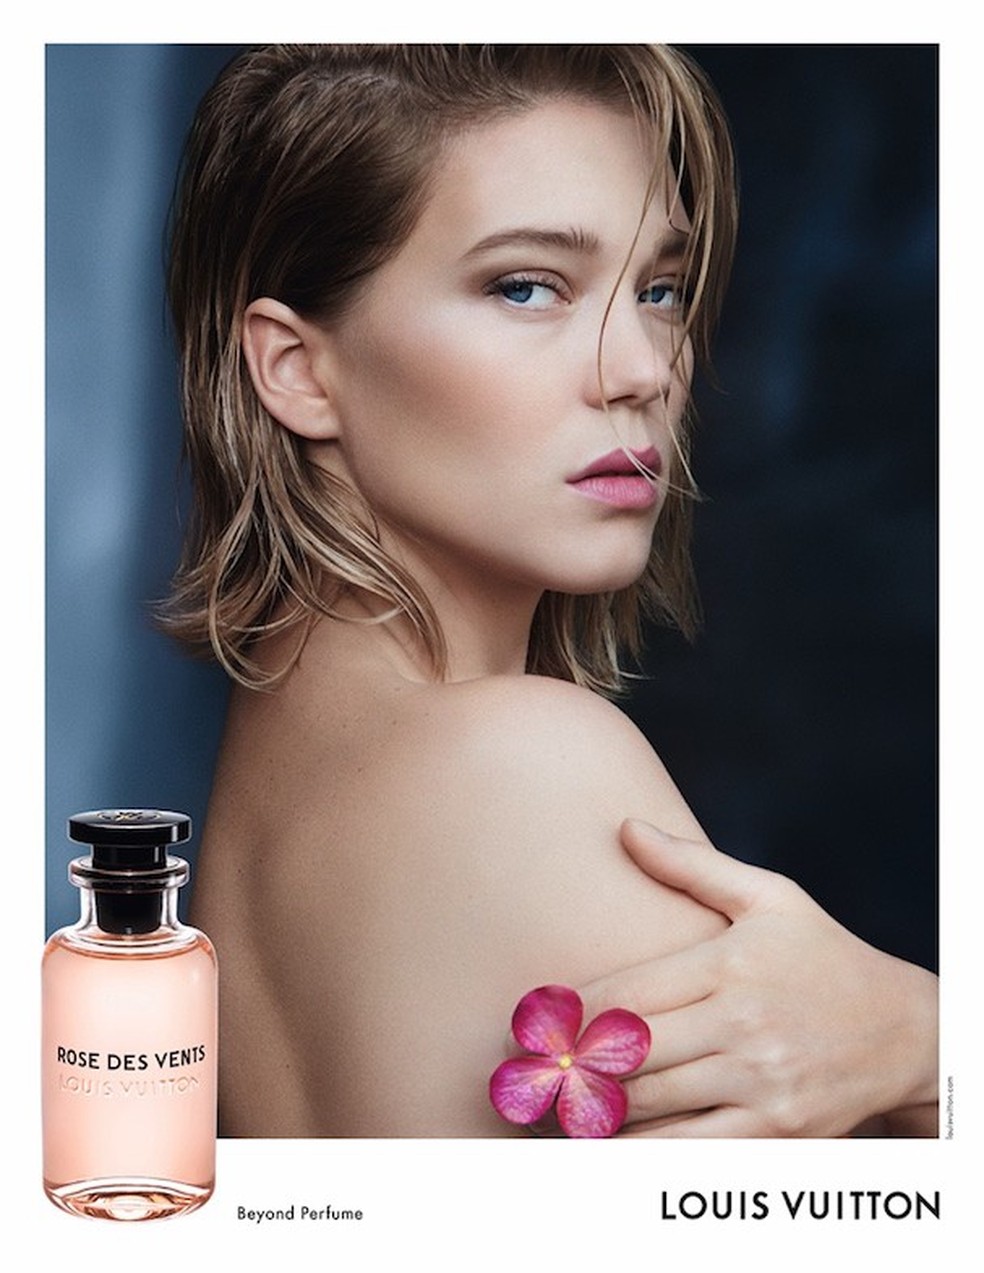 Léa Seydoux estrela campanha da nova linha de perfumes da Louis